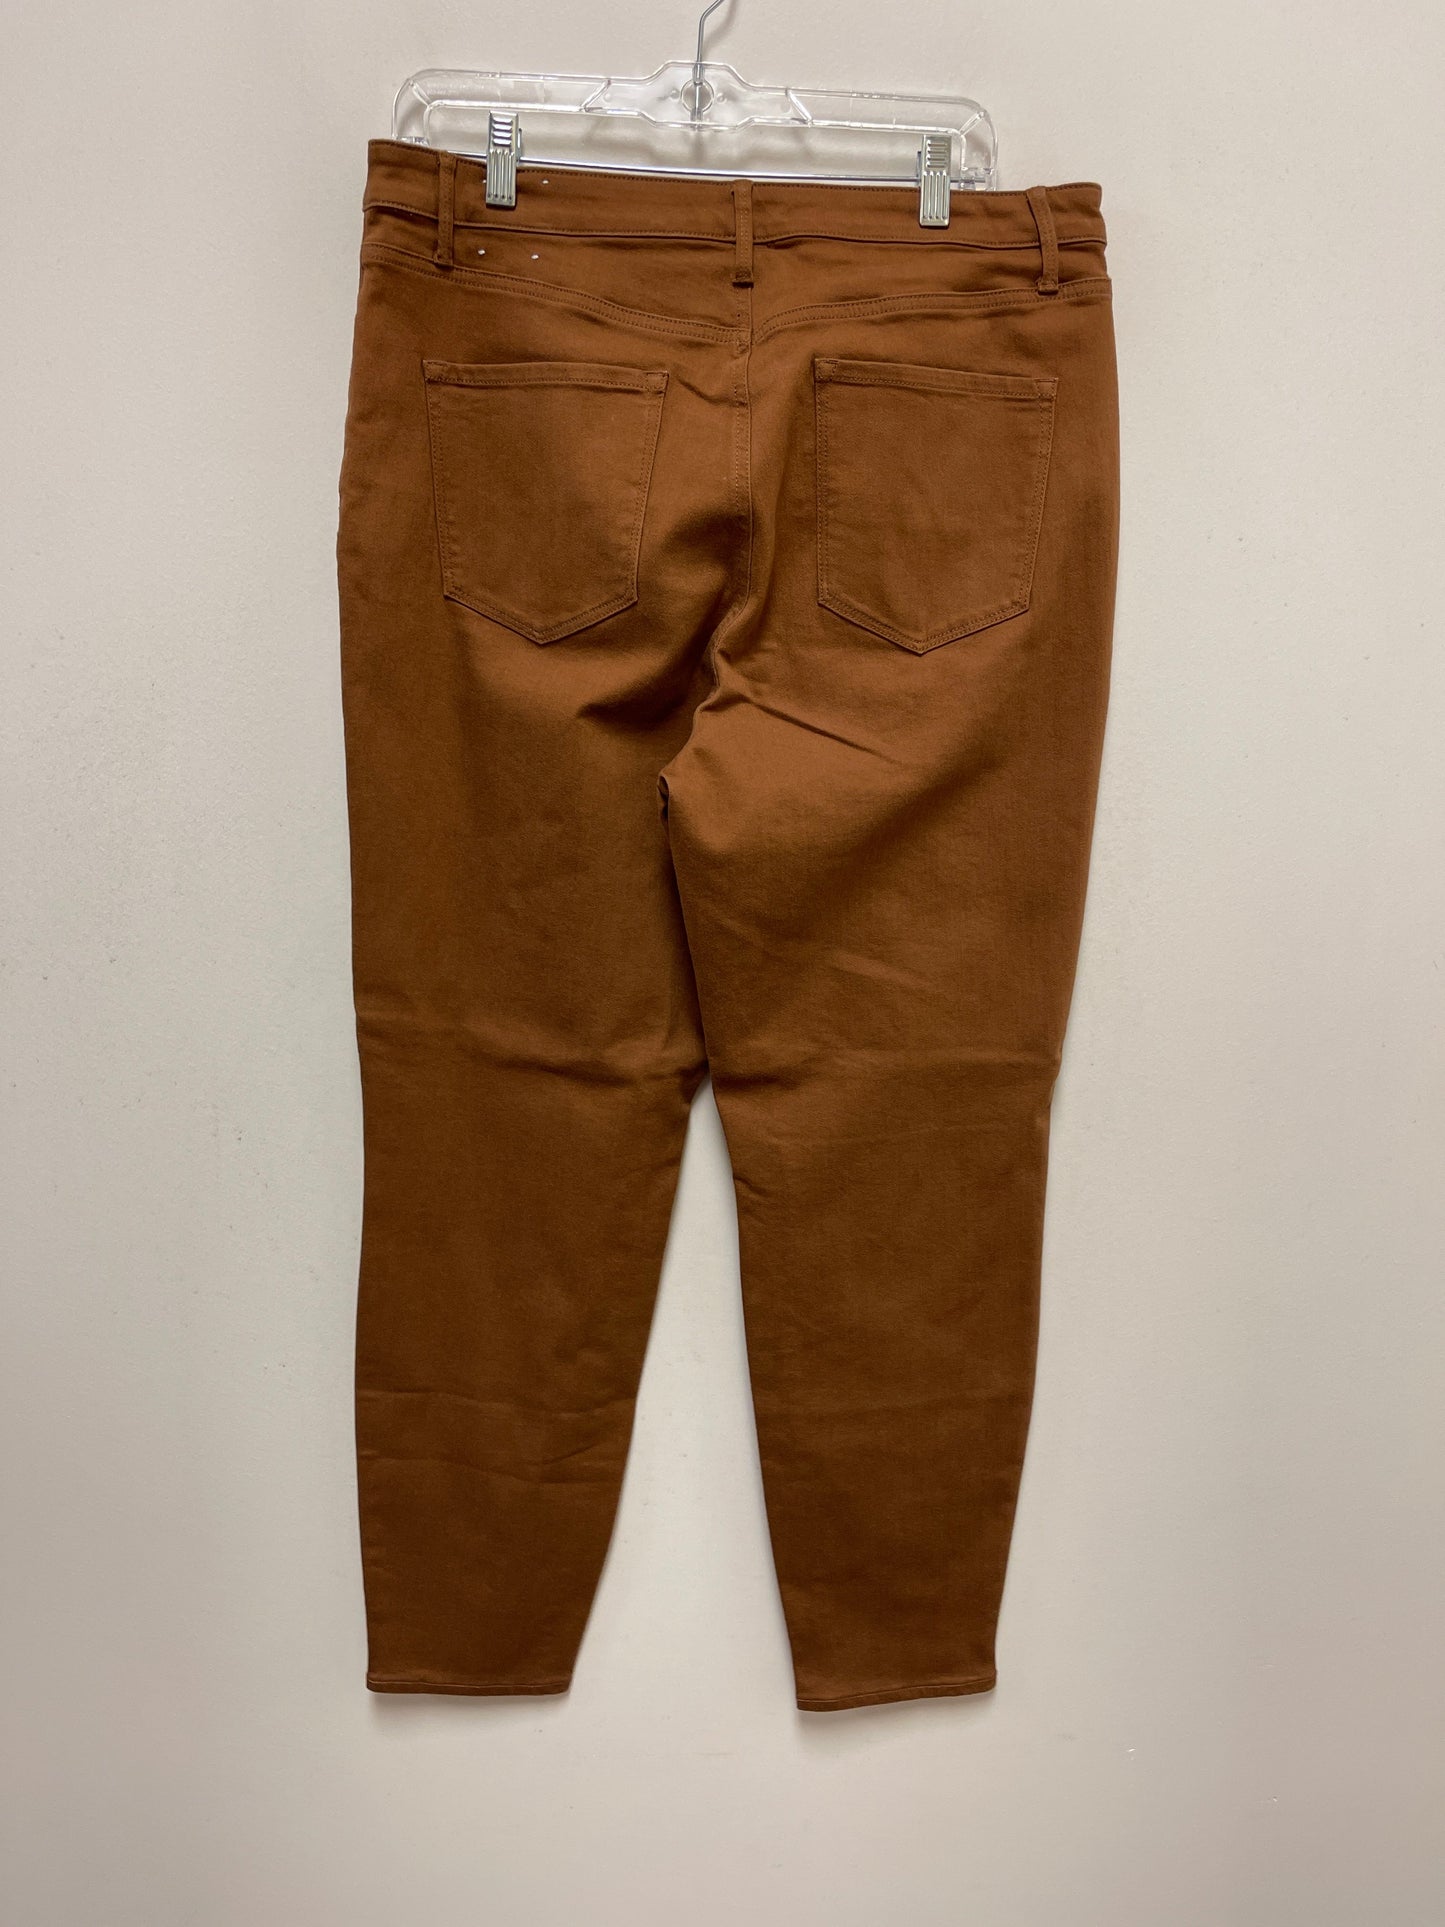 Brown Denim Jeans Skinny Talbots, Size 14